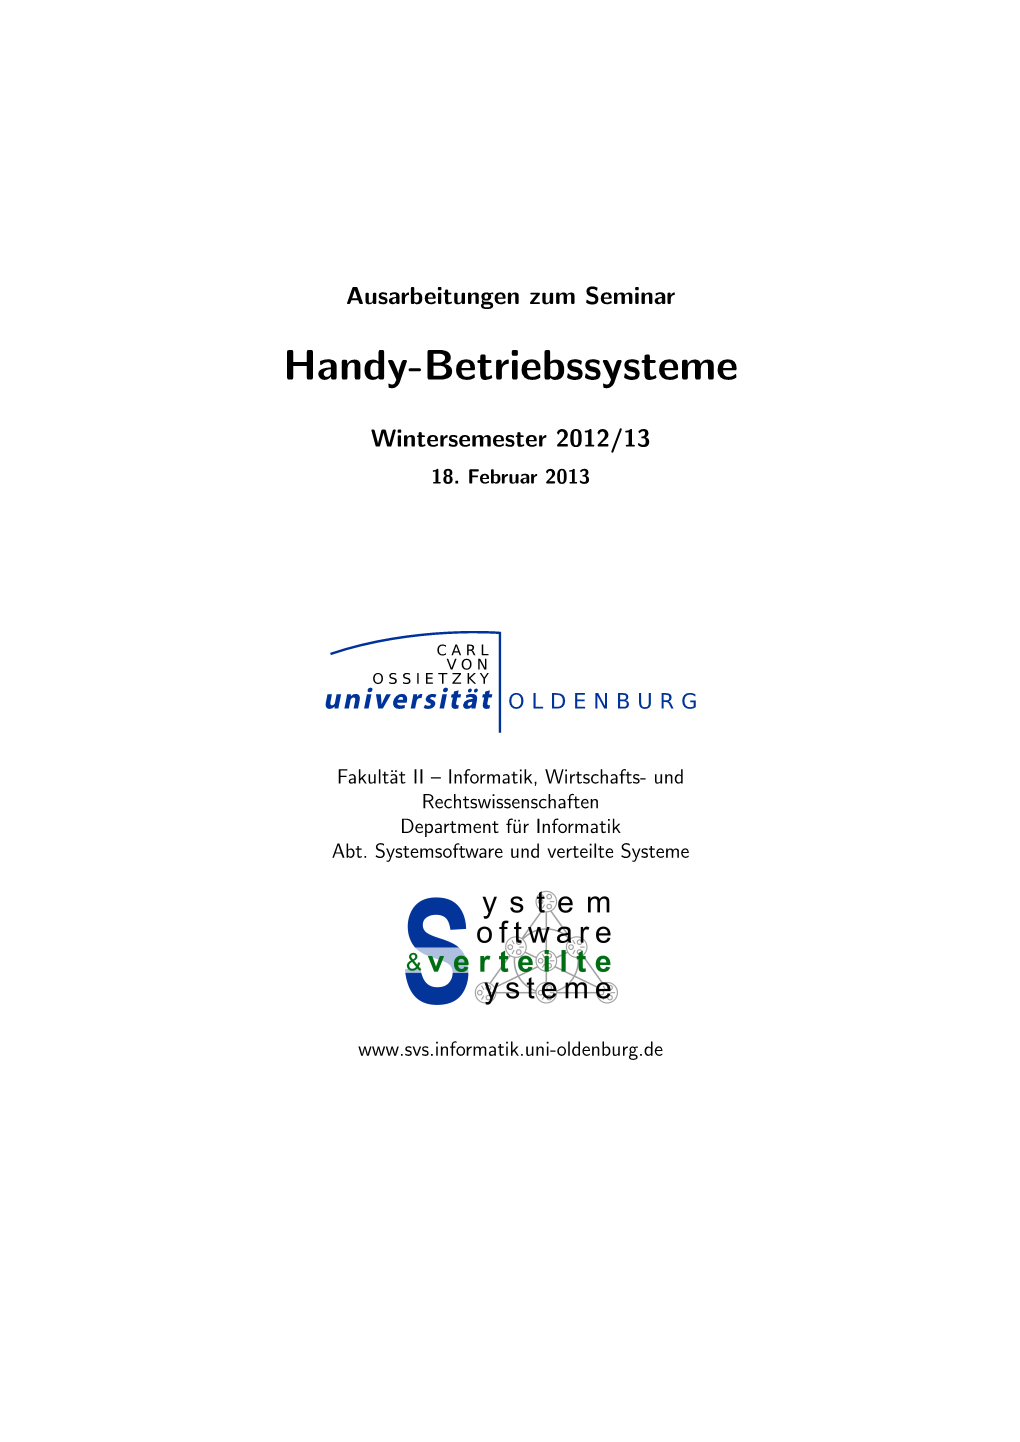 Seminar Handy-Betriebssysteme